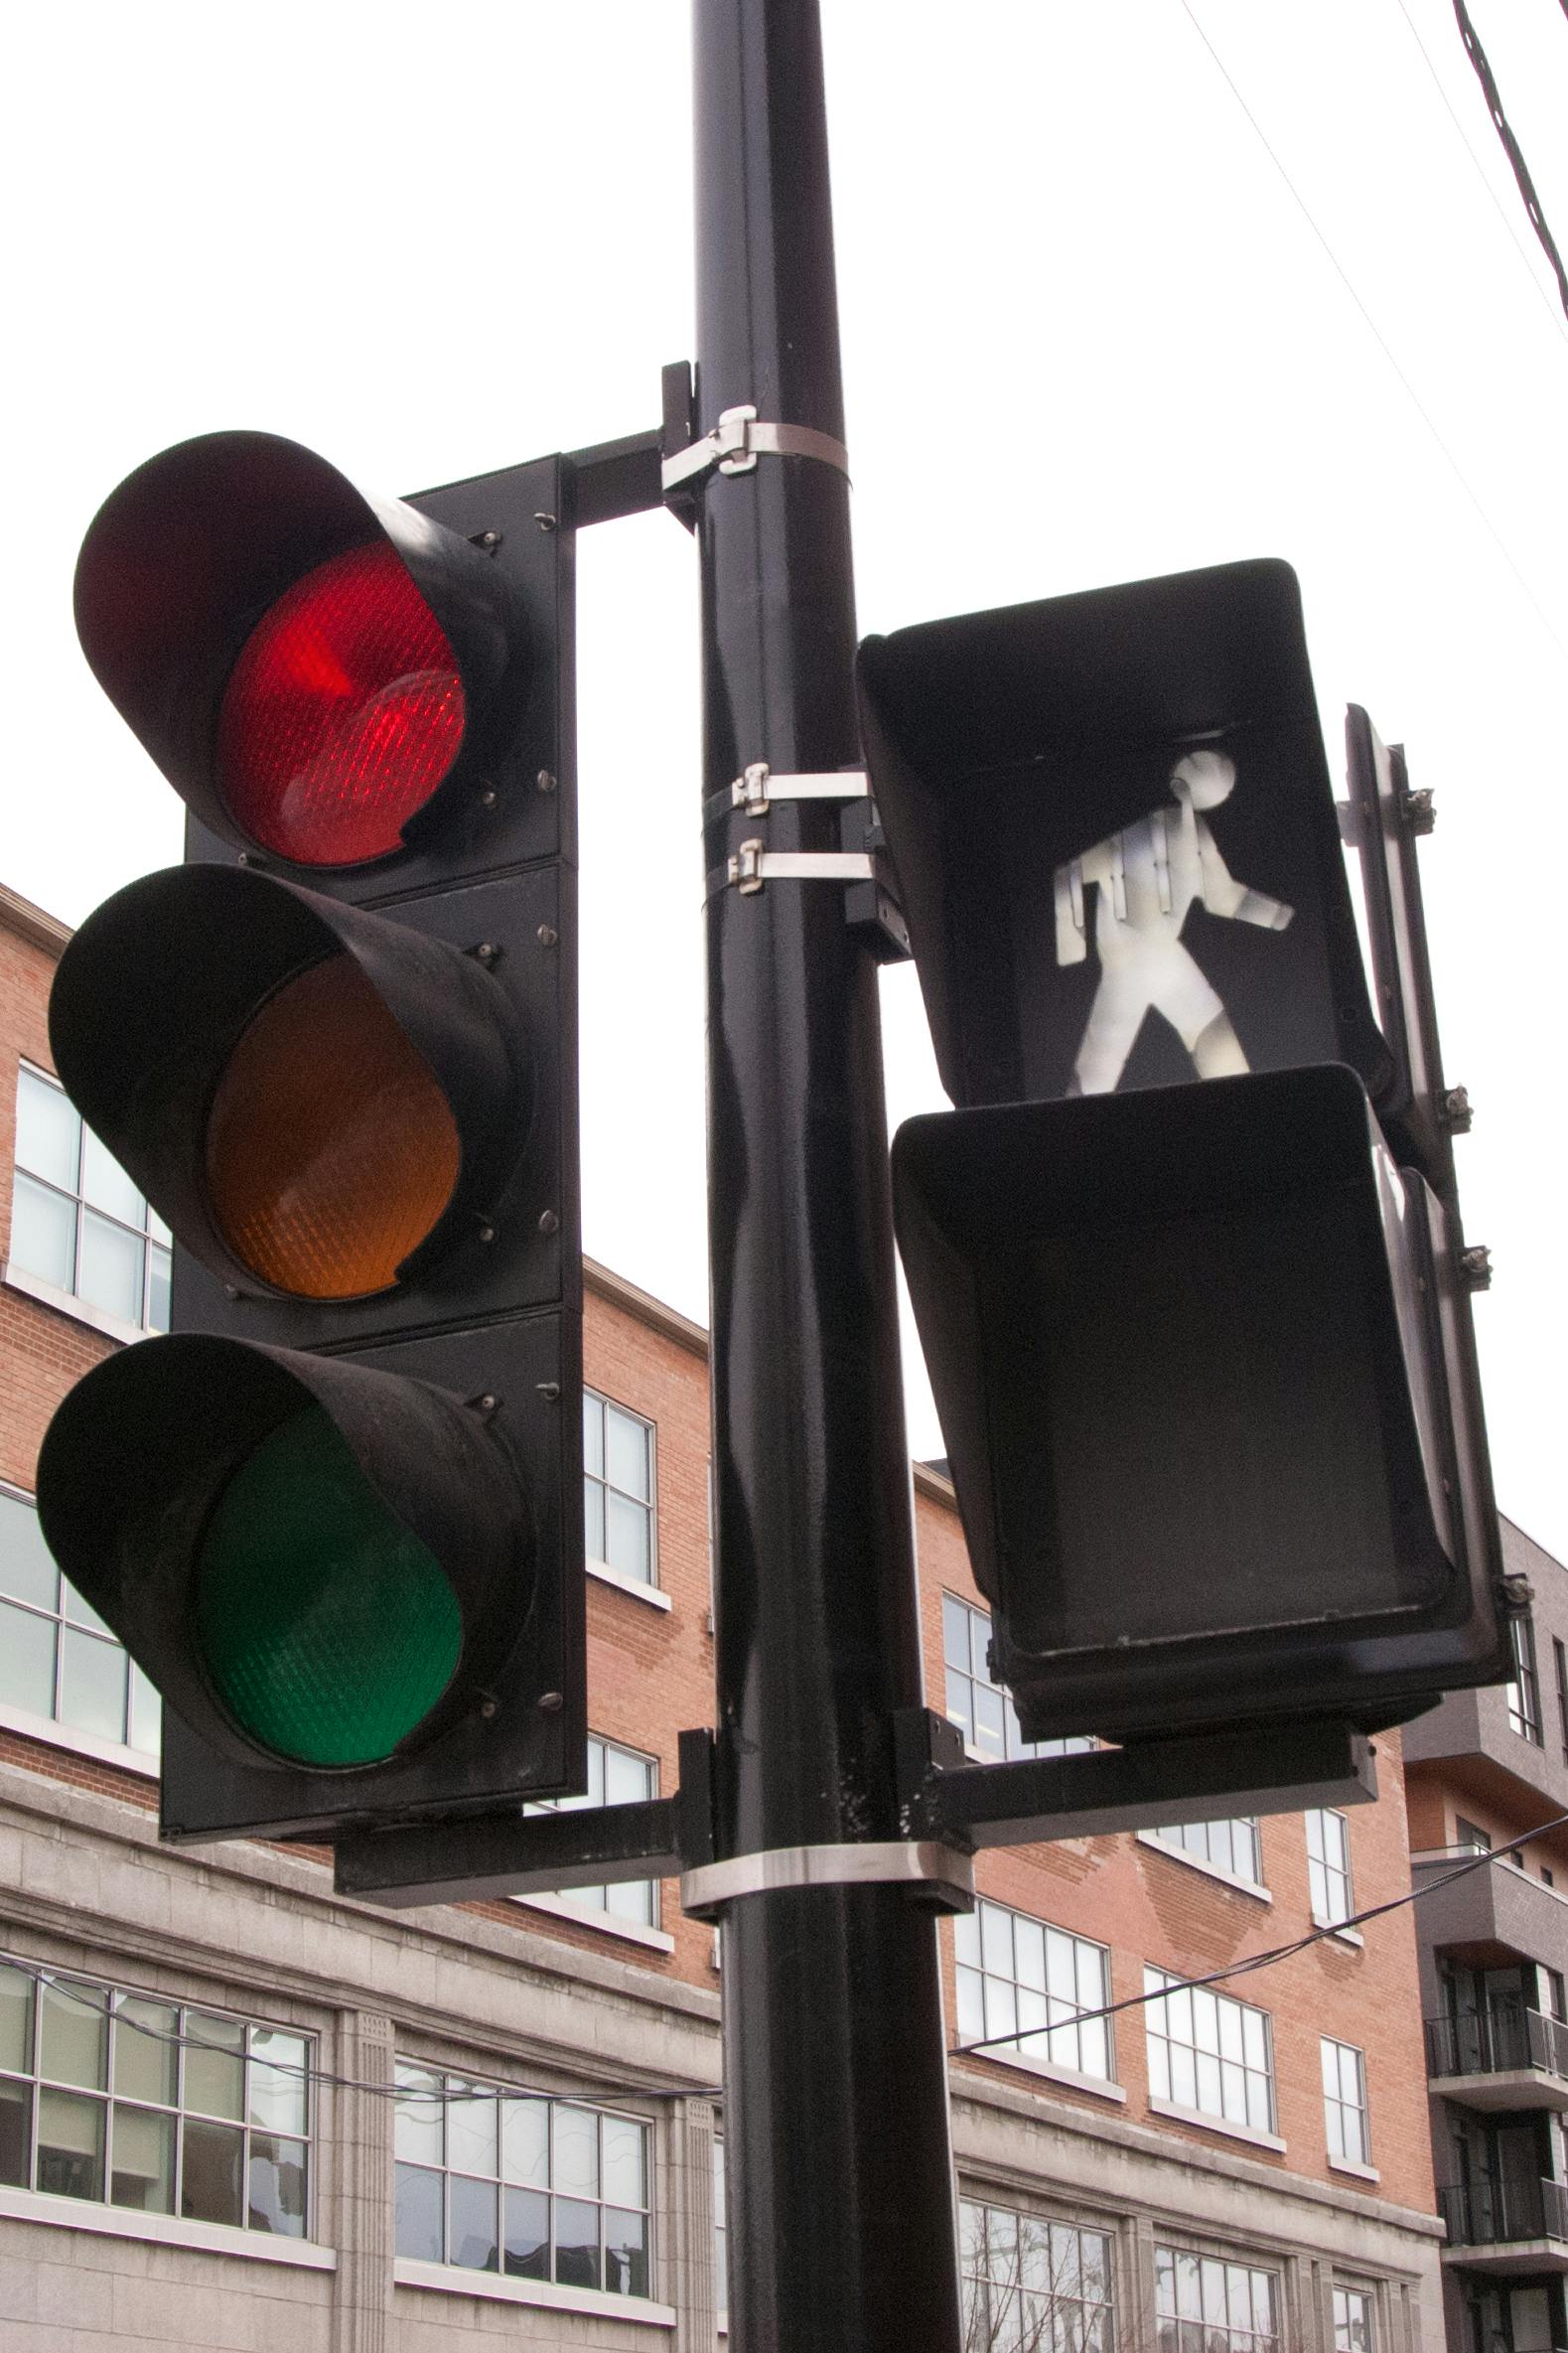 New traffic light